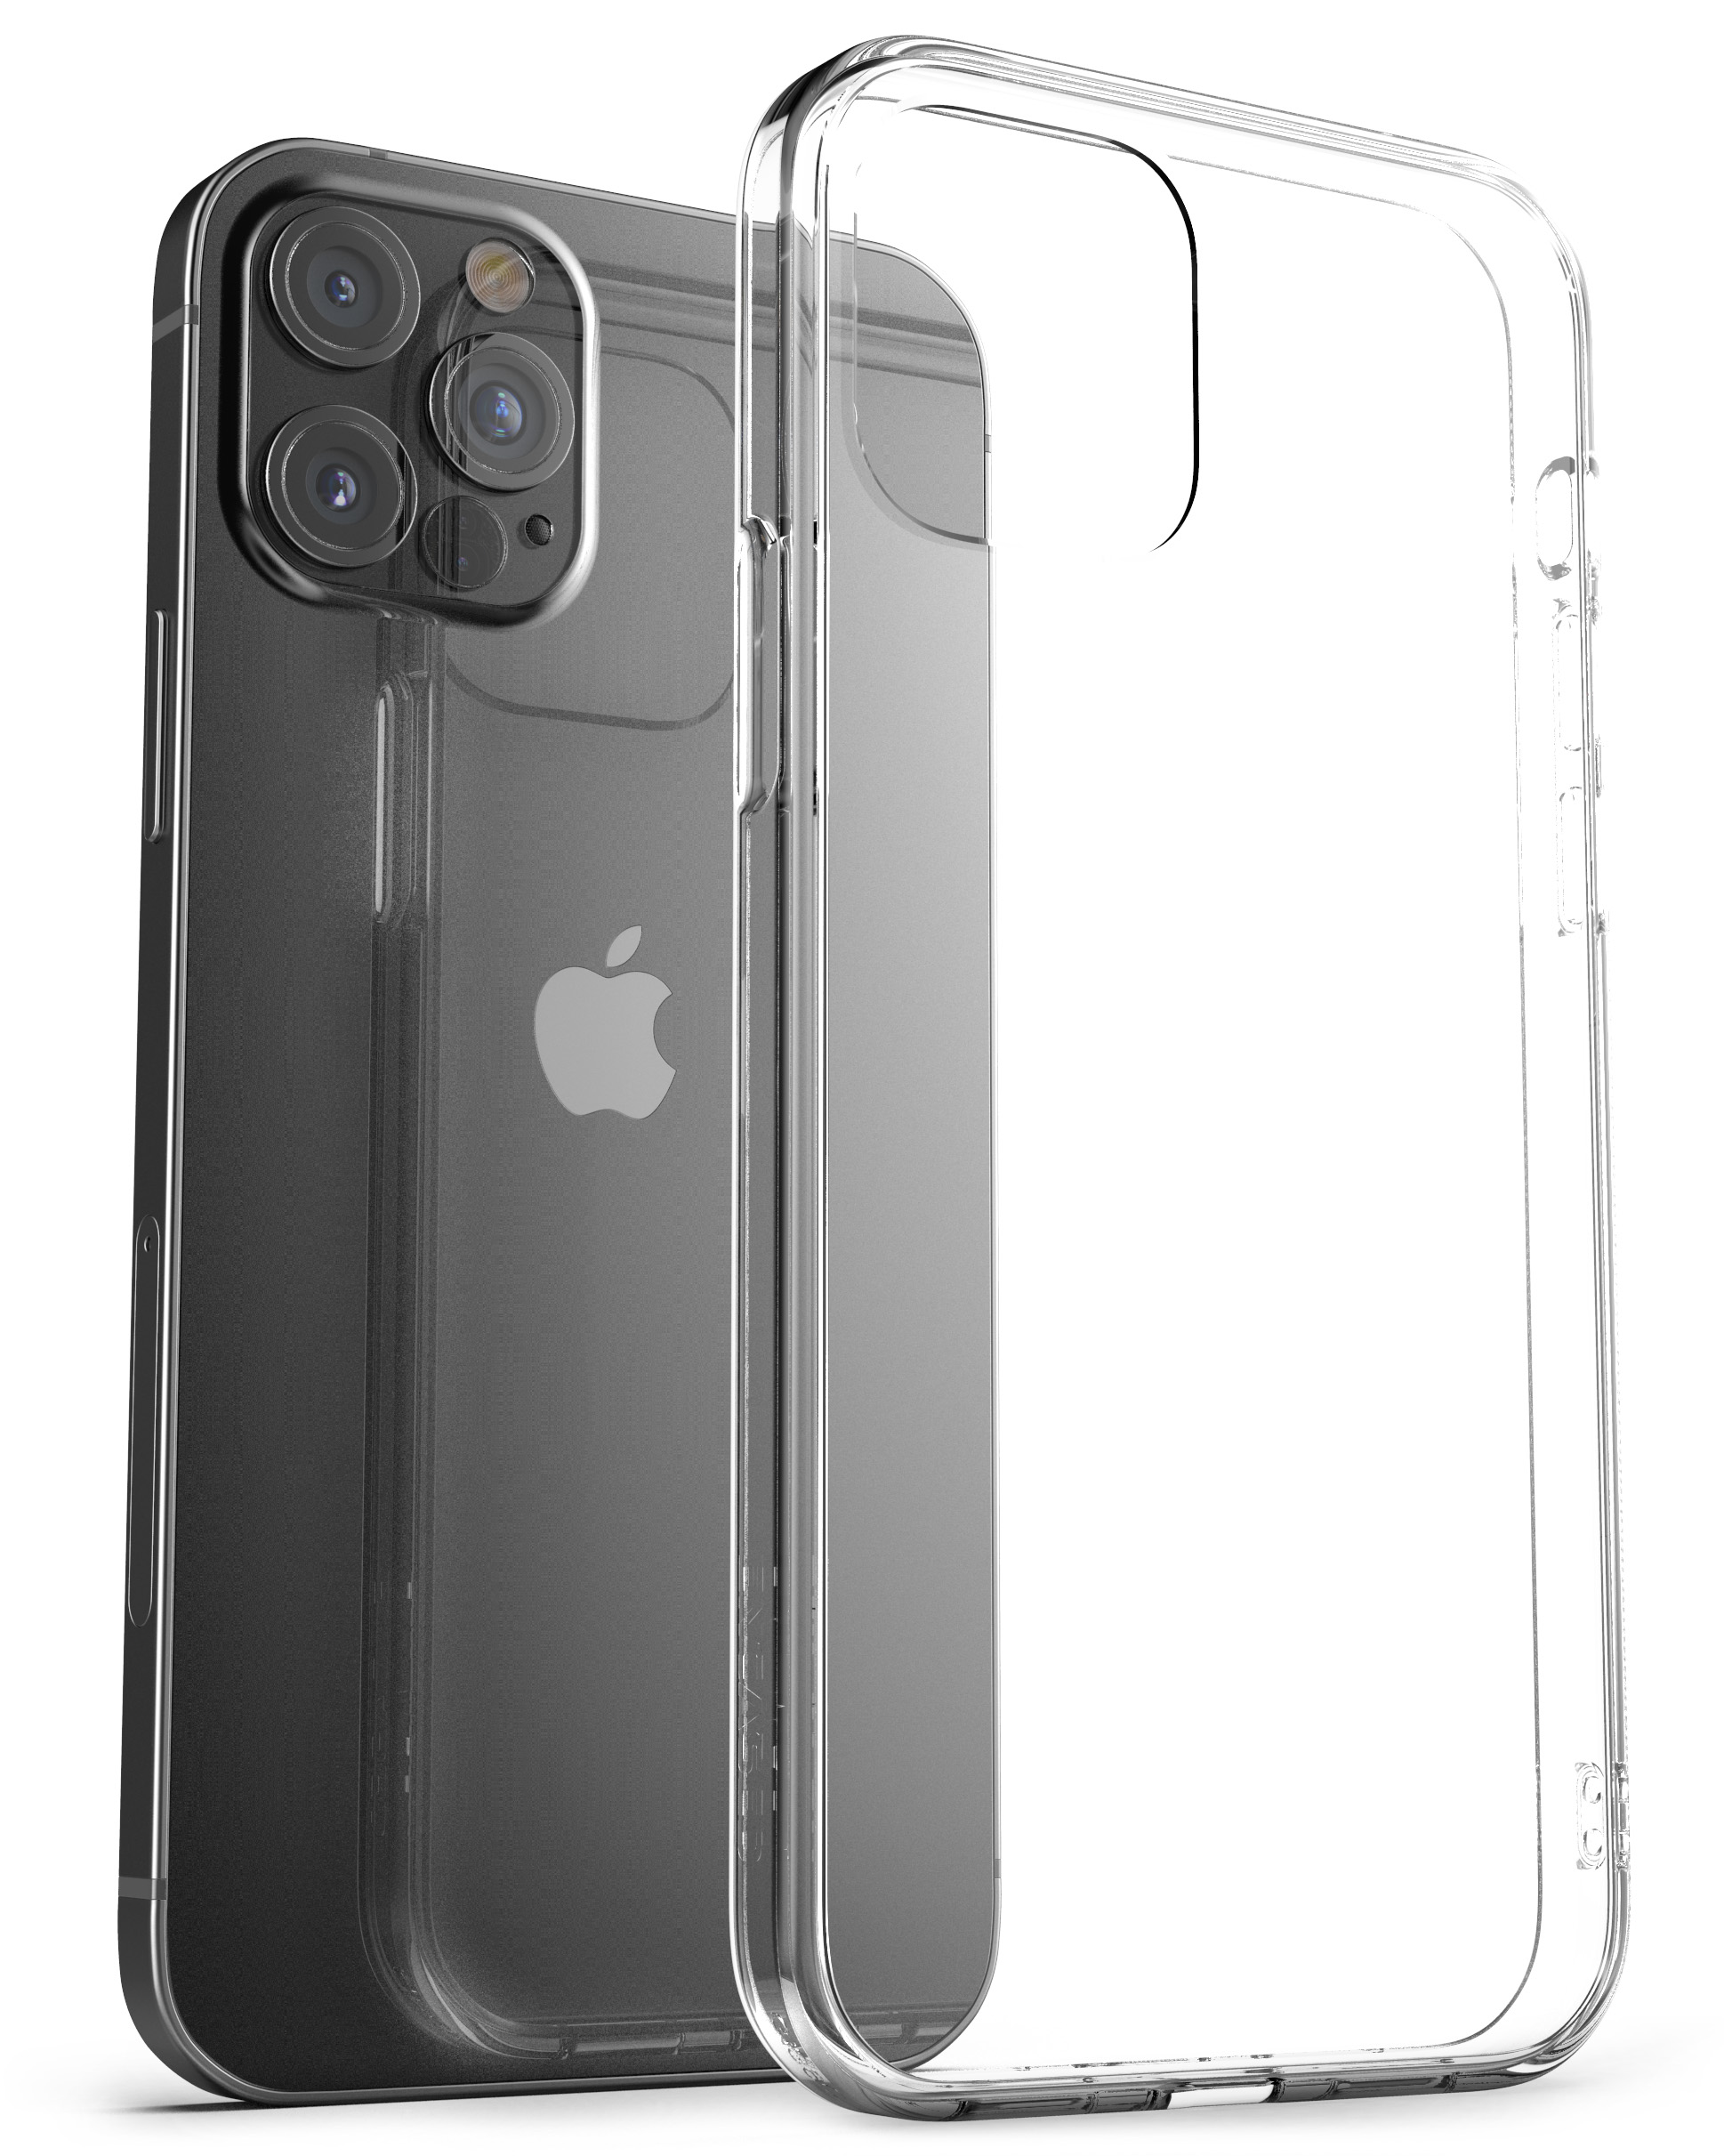 iPhone 12 Pro Max Transparent Back Cover Case